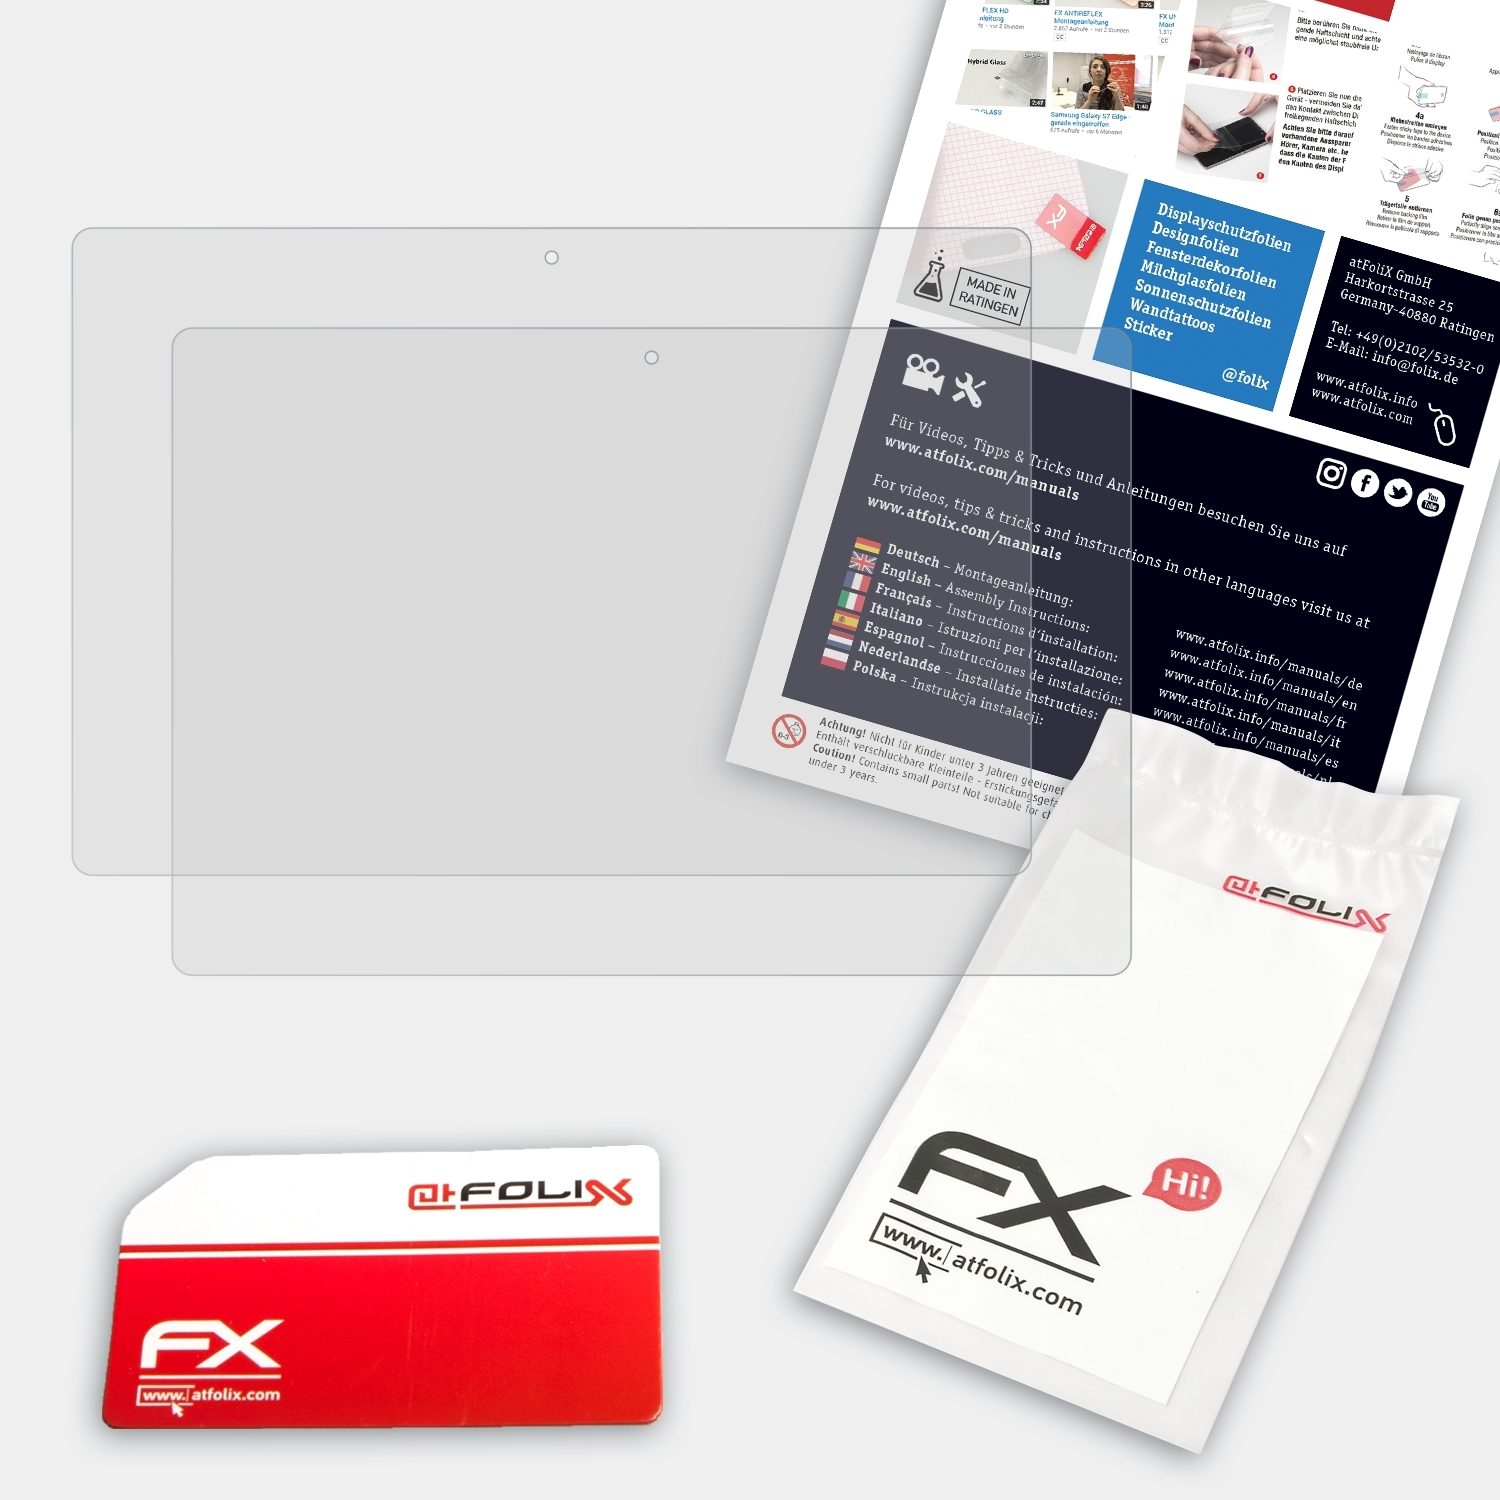 ATFOLIX 2x Arnova FX-Antireflex Displayschutz(für FamilyPad)